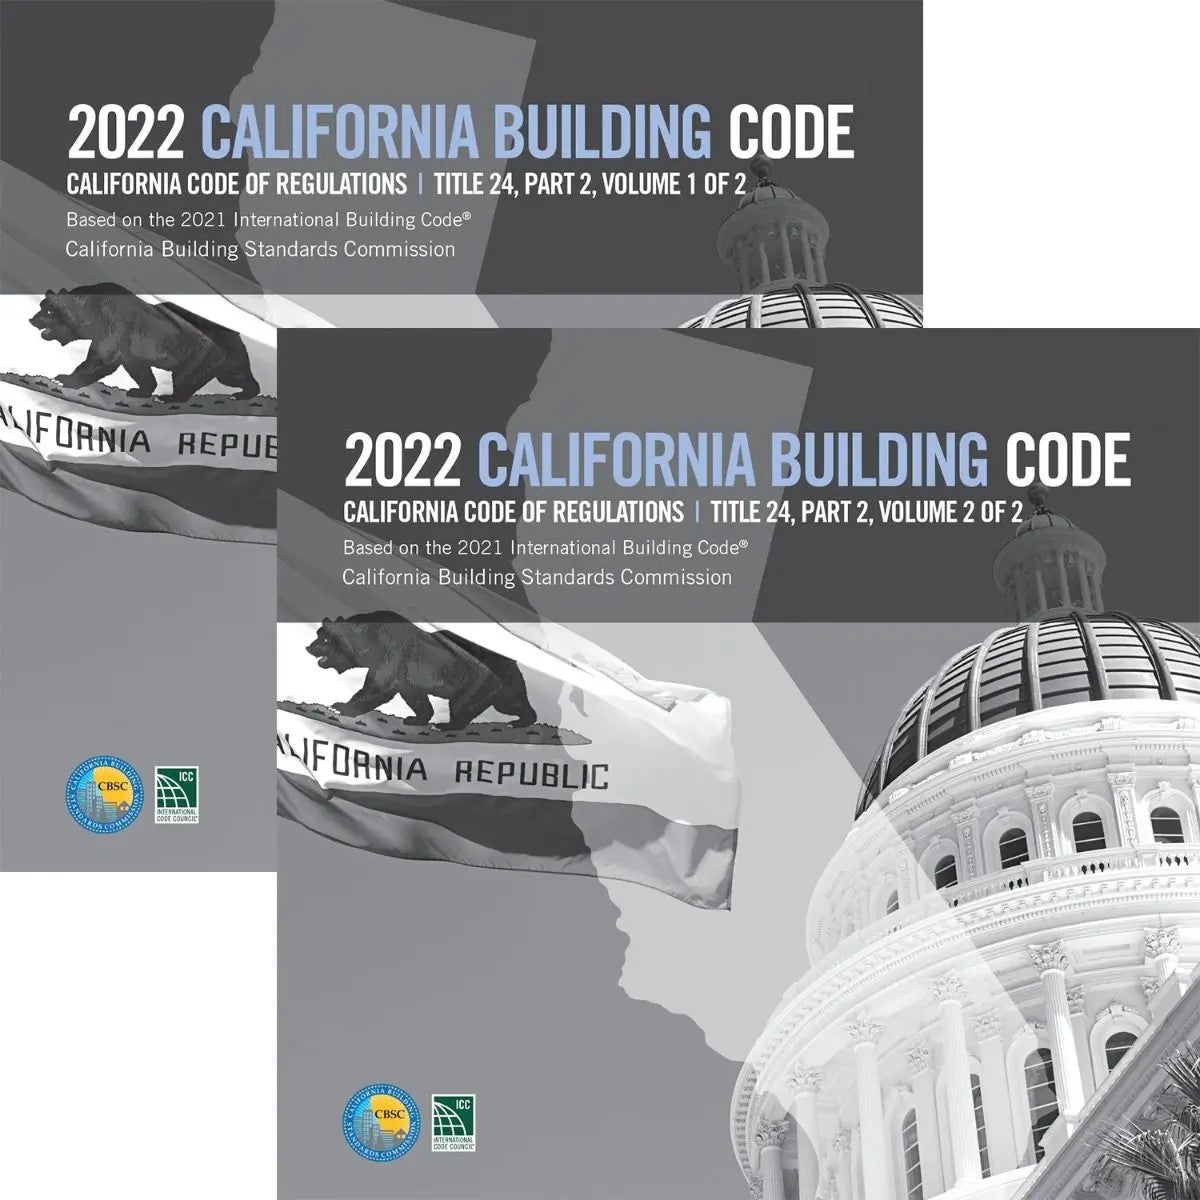 2022 California Building Code, Title 24, Part 2 Volumes 1 & 2